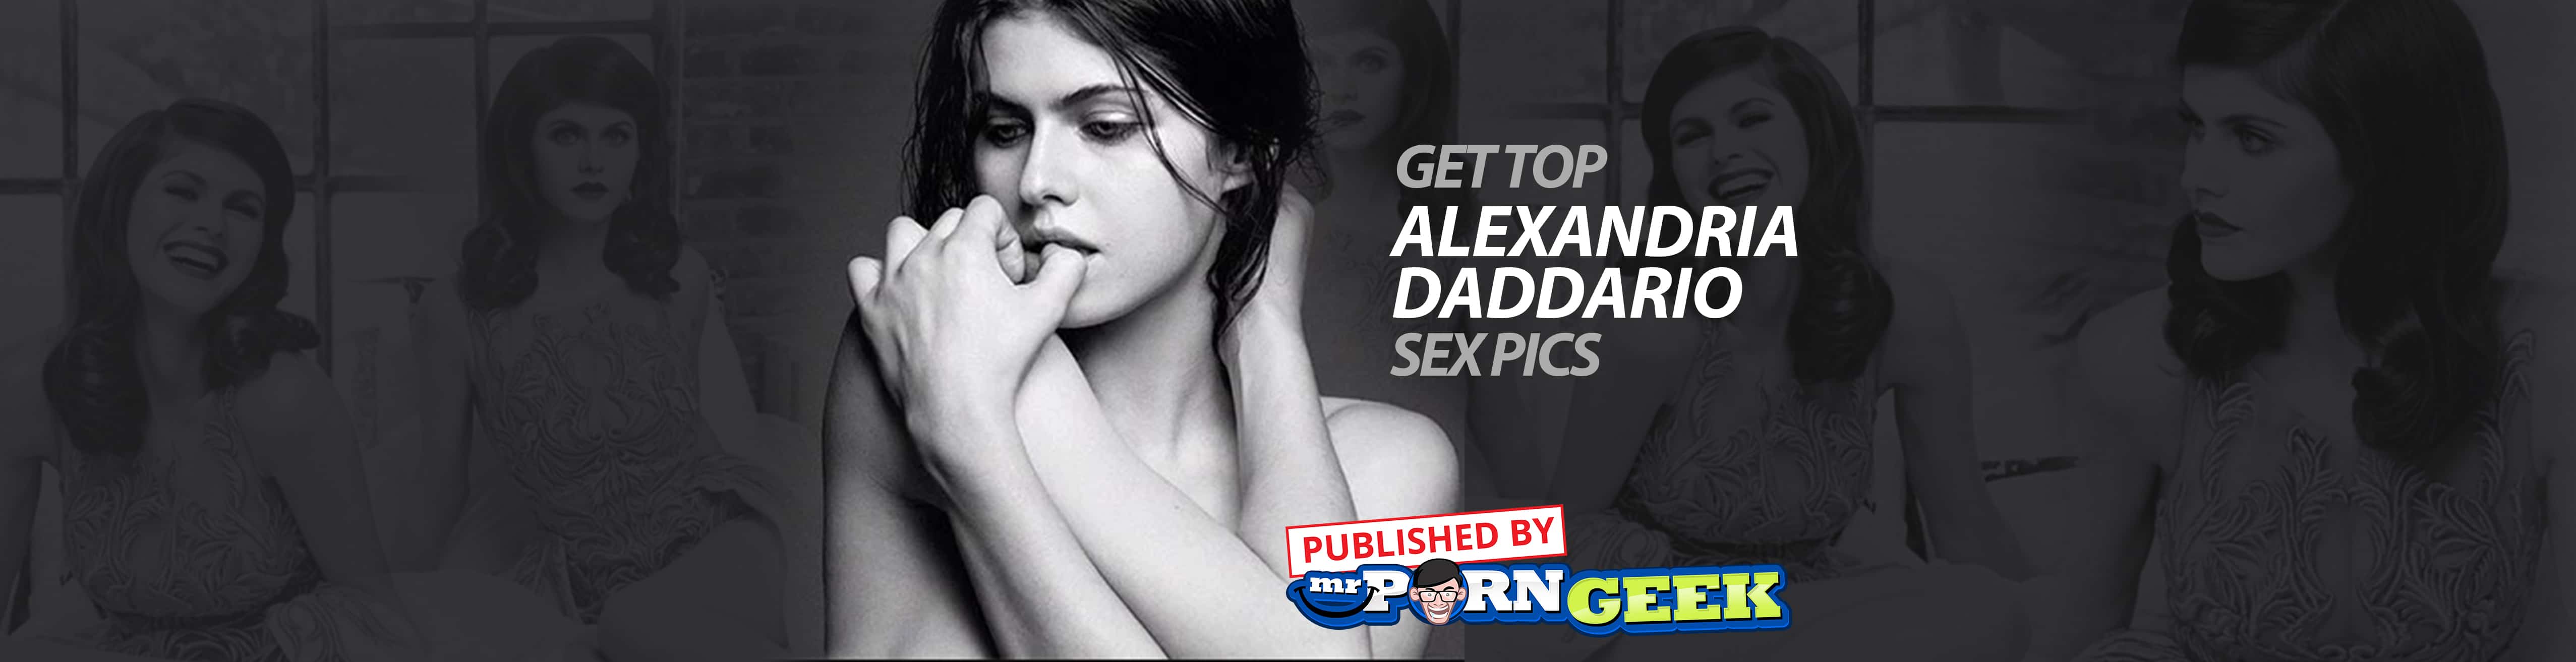 Super Top Sex Vidios - Get Top Alexandria Daddario Nudes - Sex Pics And Naked Videos